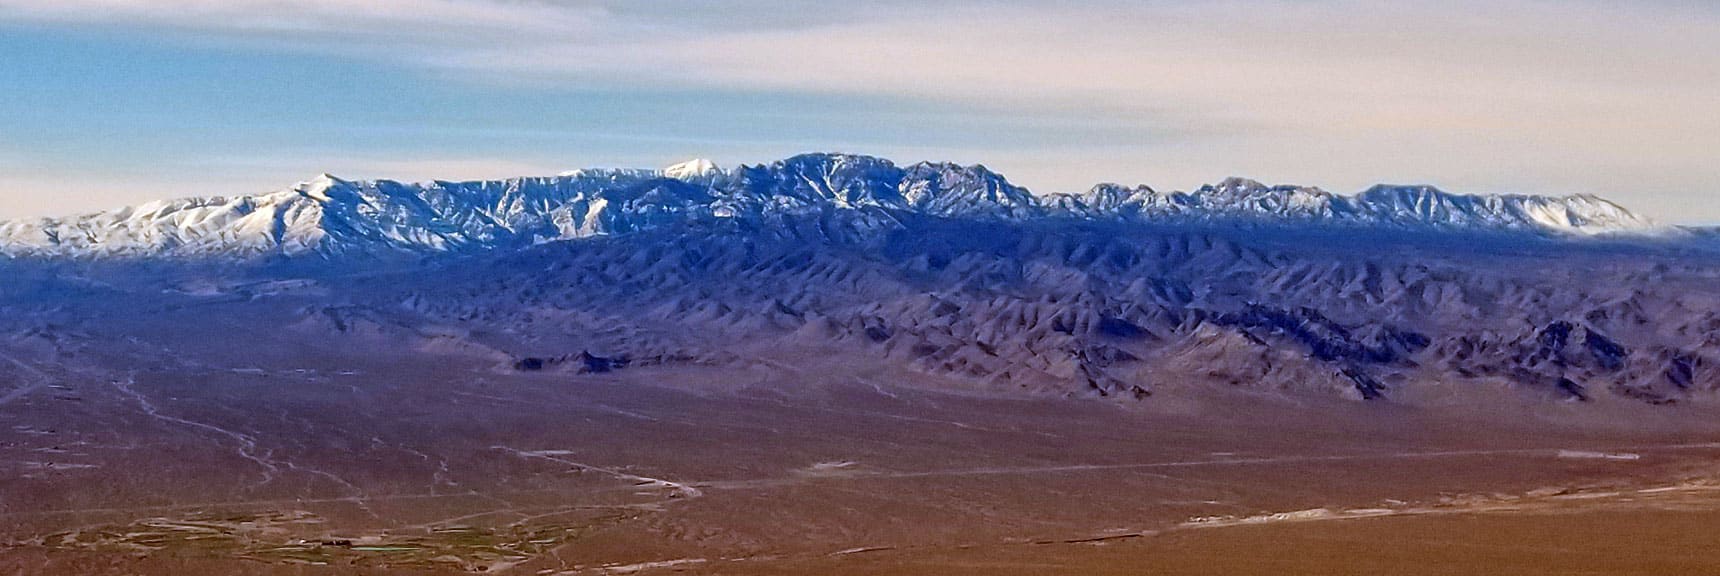 Mummy Mountain from Western Summit of Gass Peak